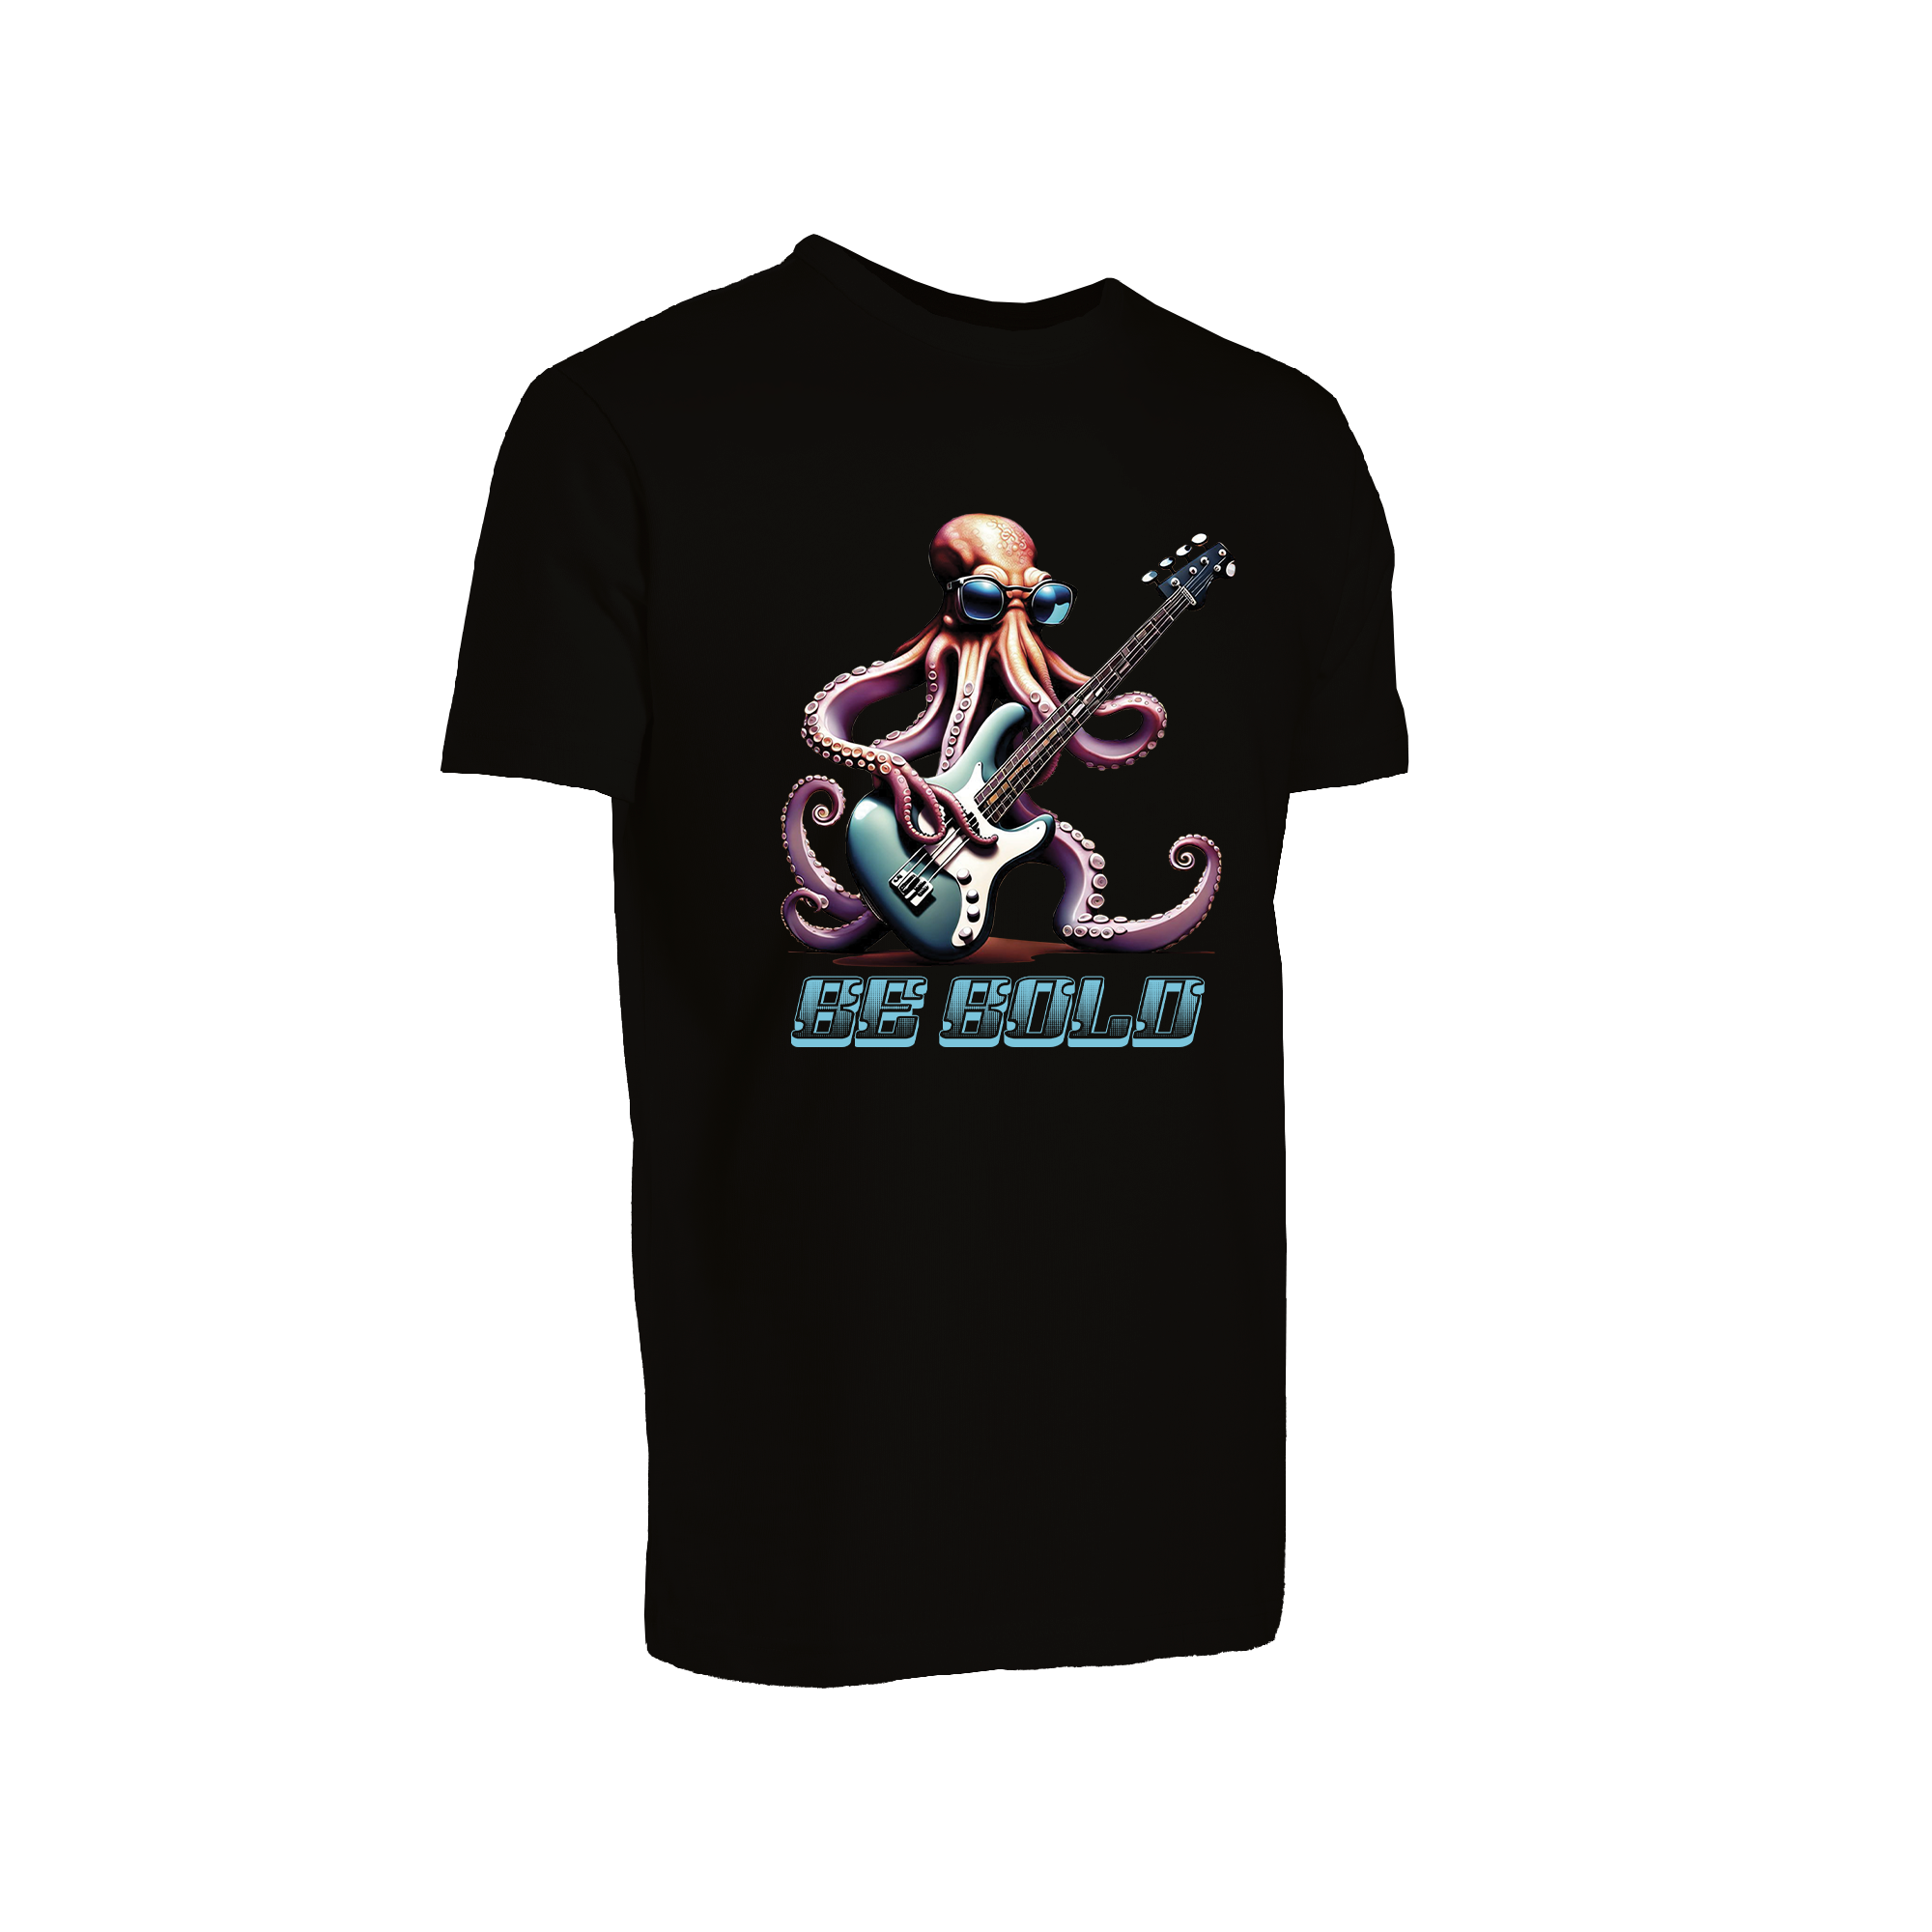 Graphite Short Sleeve Crew Neck T-Shirt Octopus Guitar Patterned